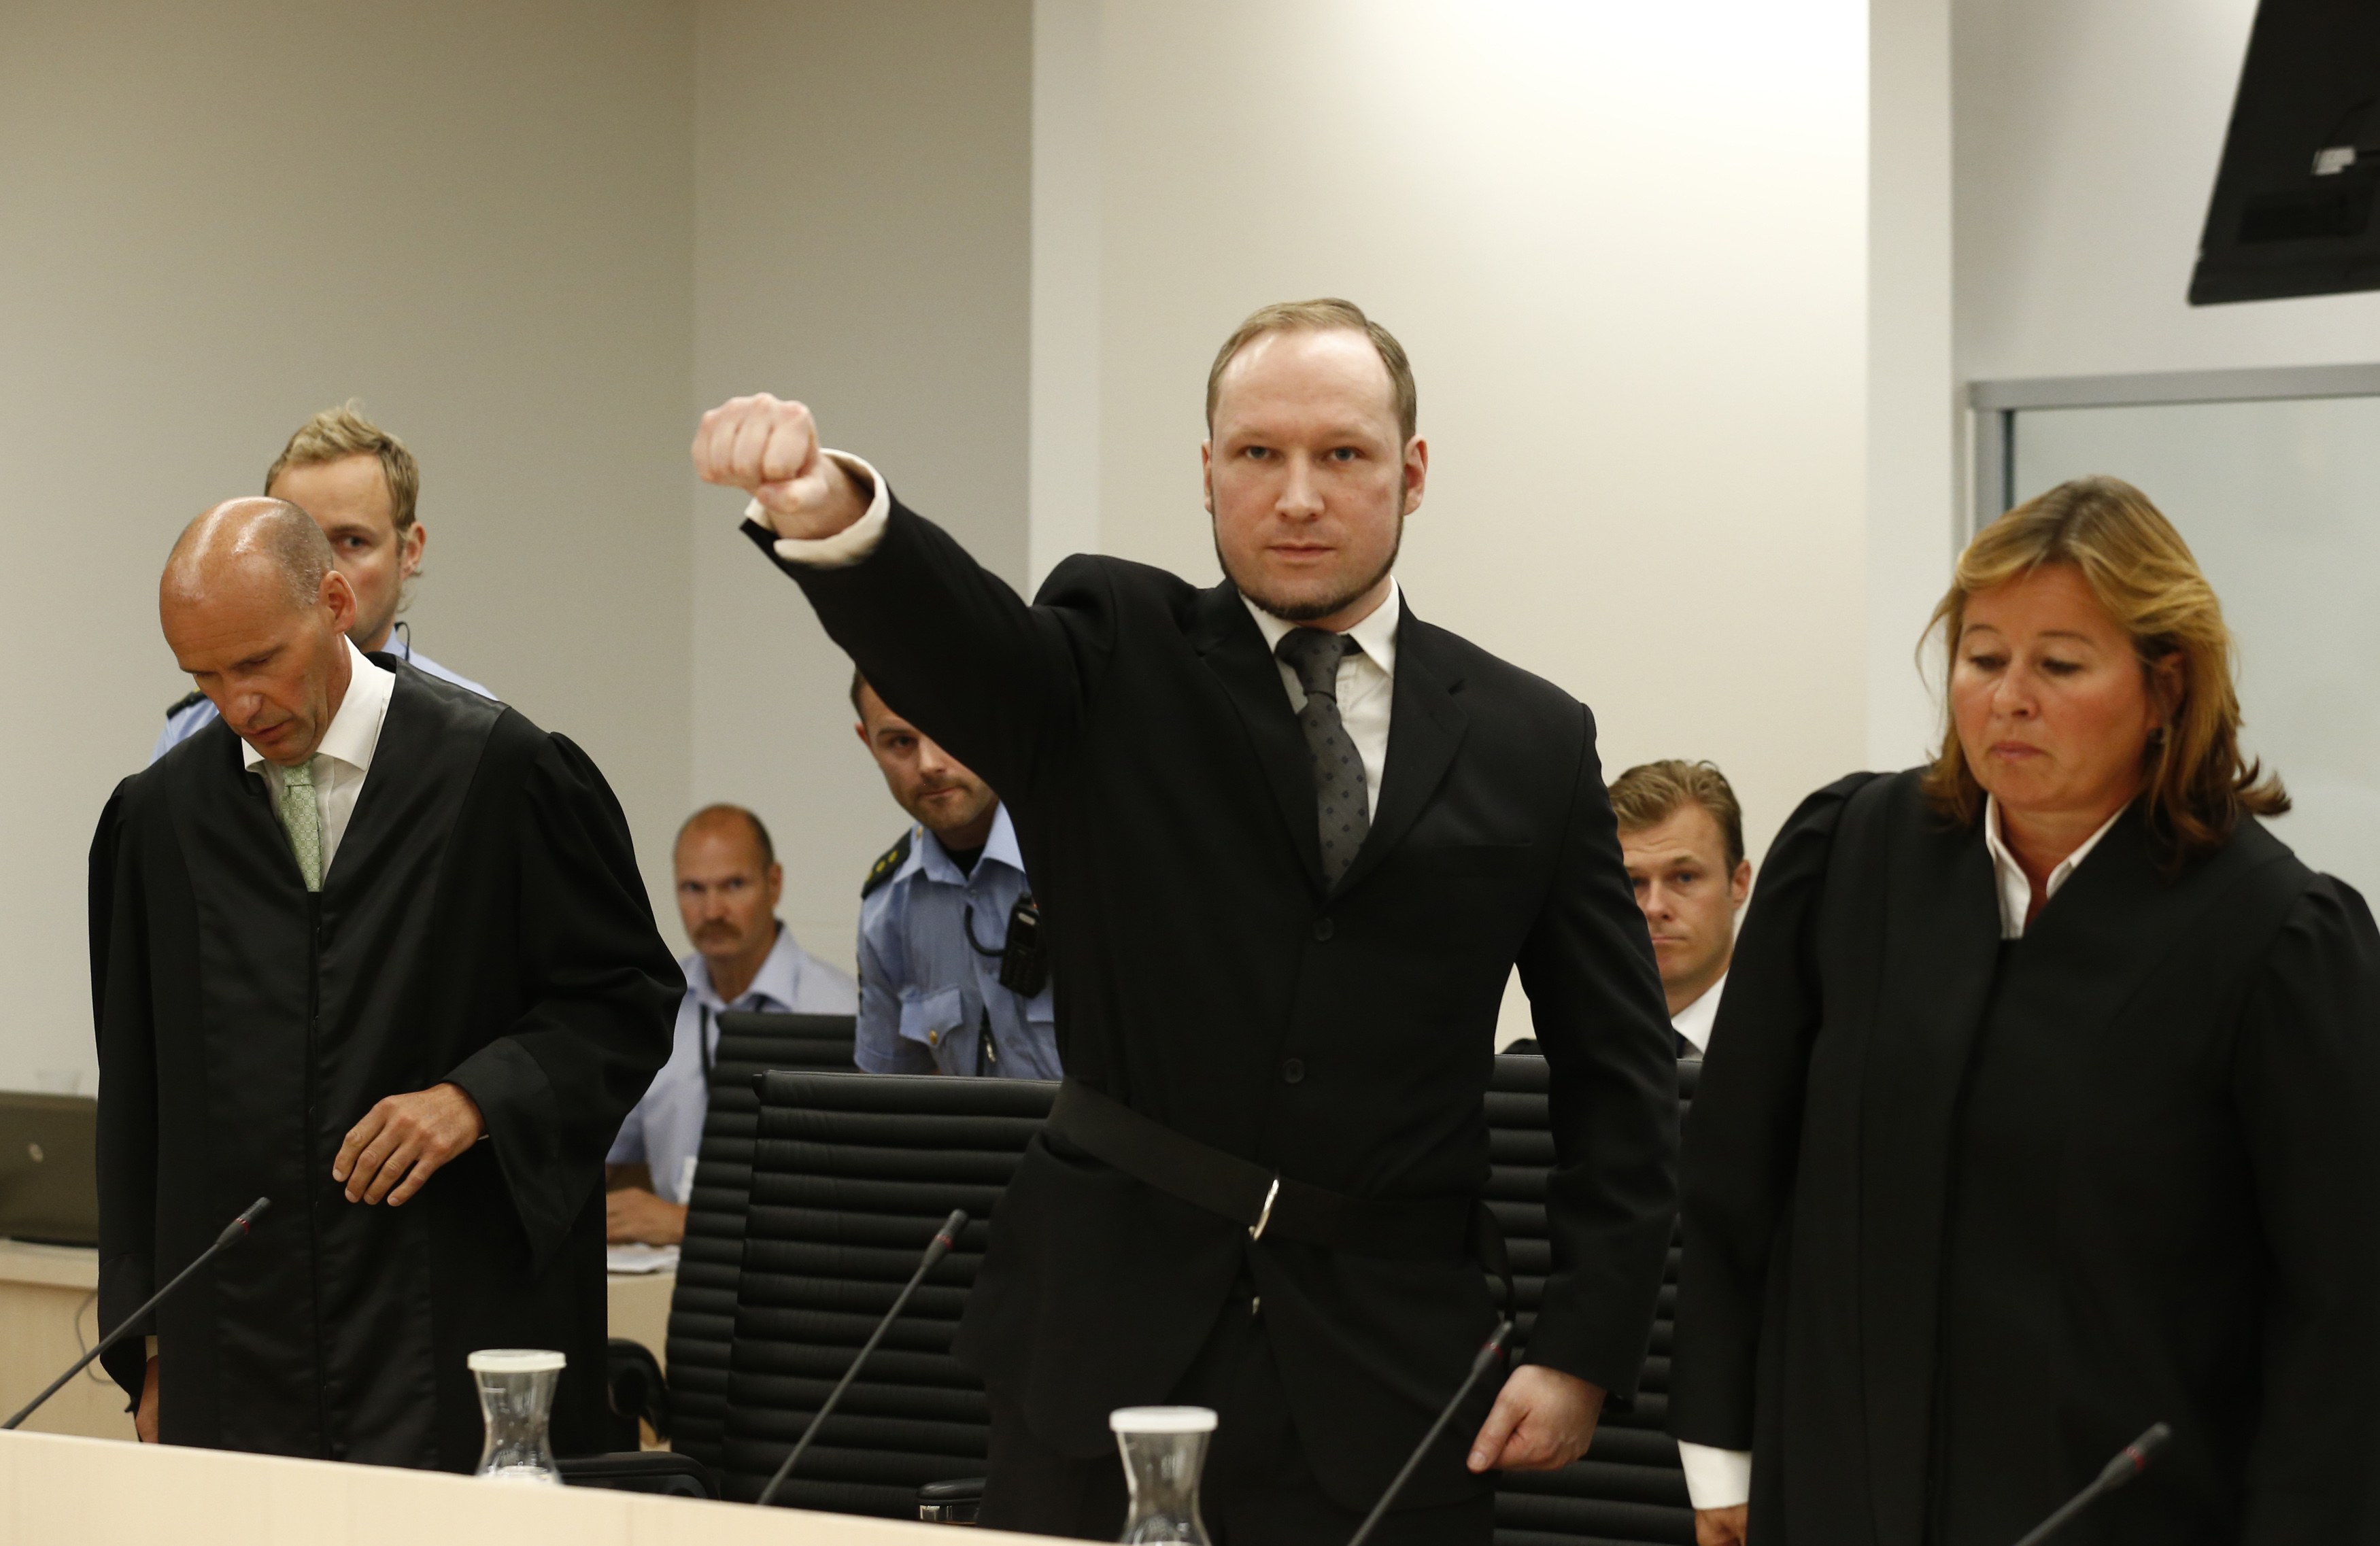 Sick person Semicircle Peregrination UPDATE Verdict in Norvegia: Anders Breivik a fost condamnat la 21 de ani de  inchisoare cu posibilitate de prelungire. Justitia a decis ca acesta este  responsabil penal - HotNews.ro